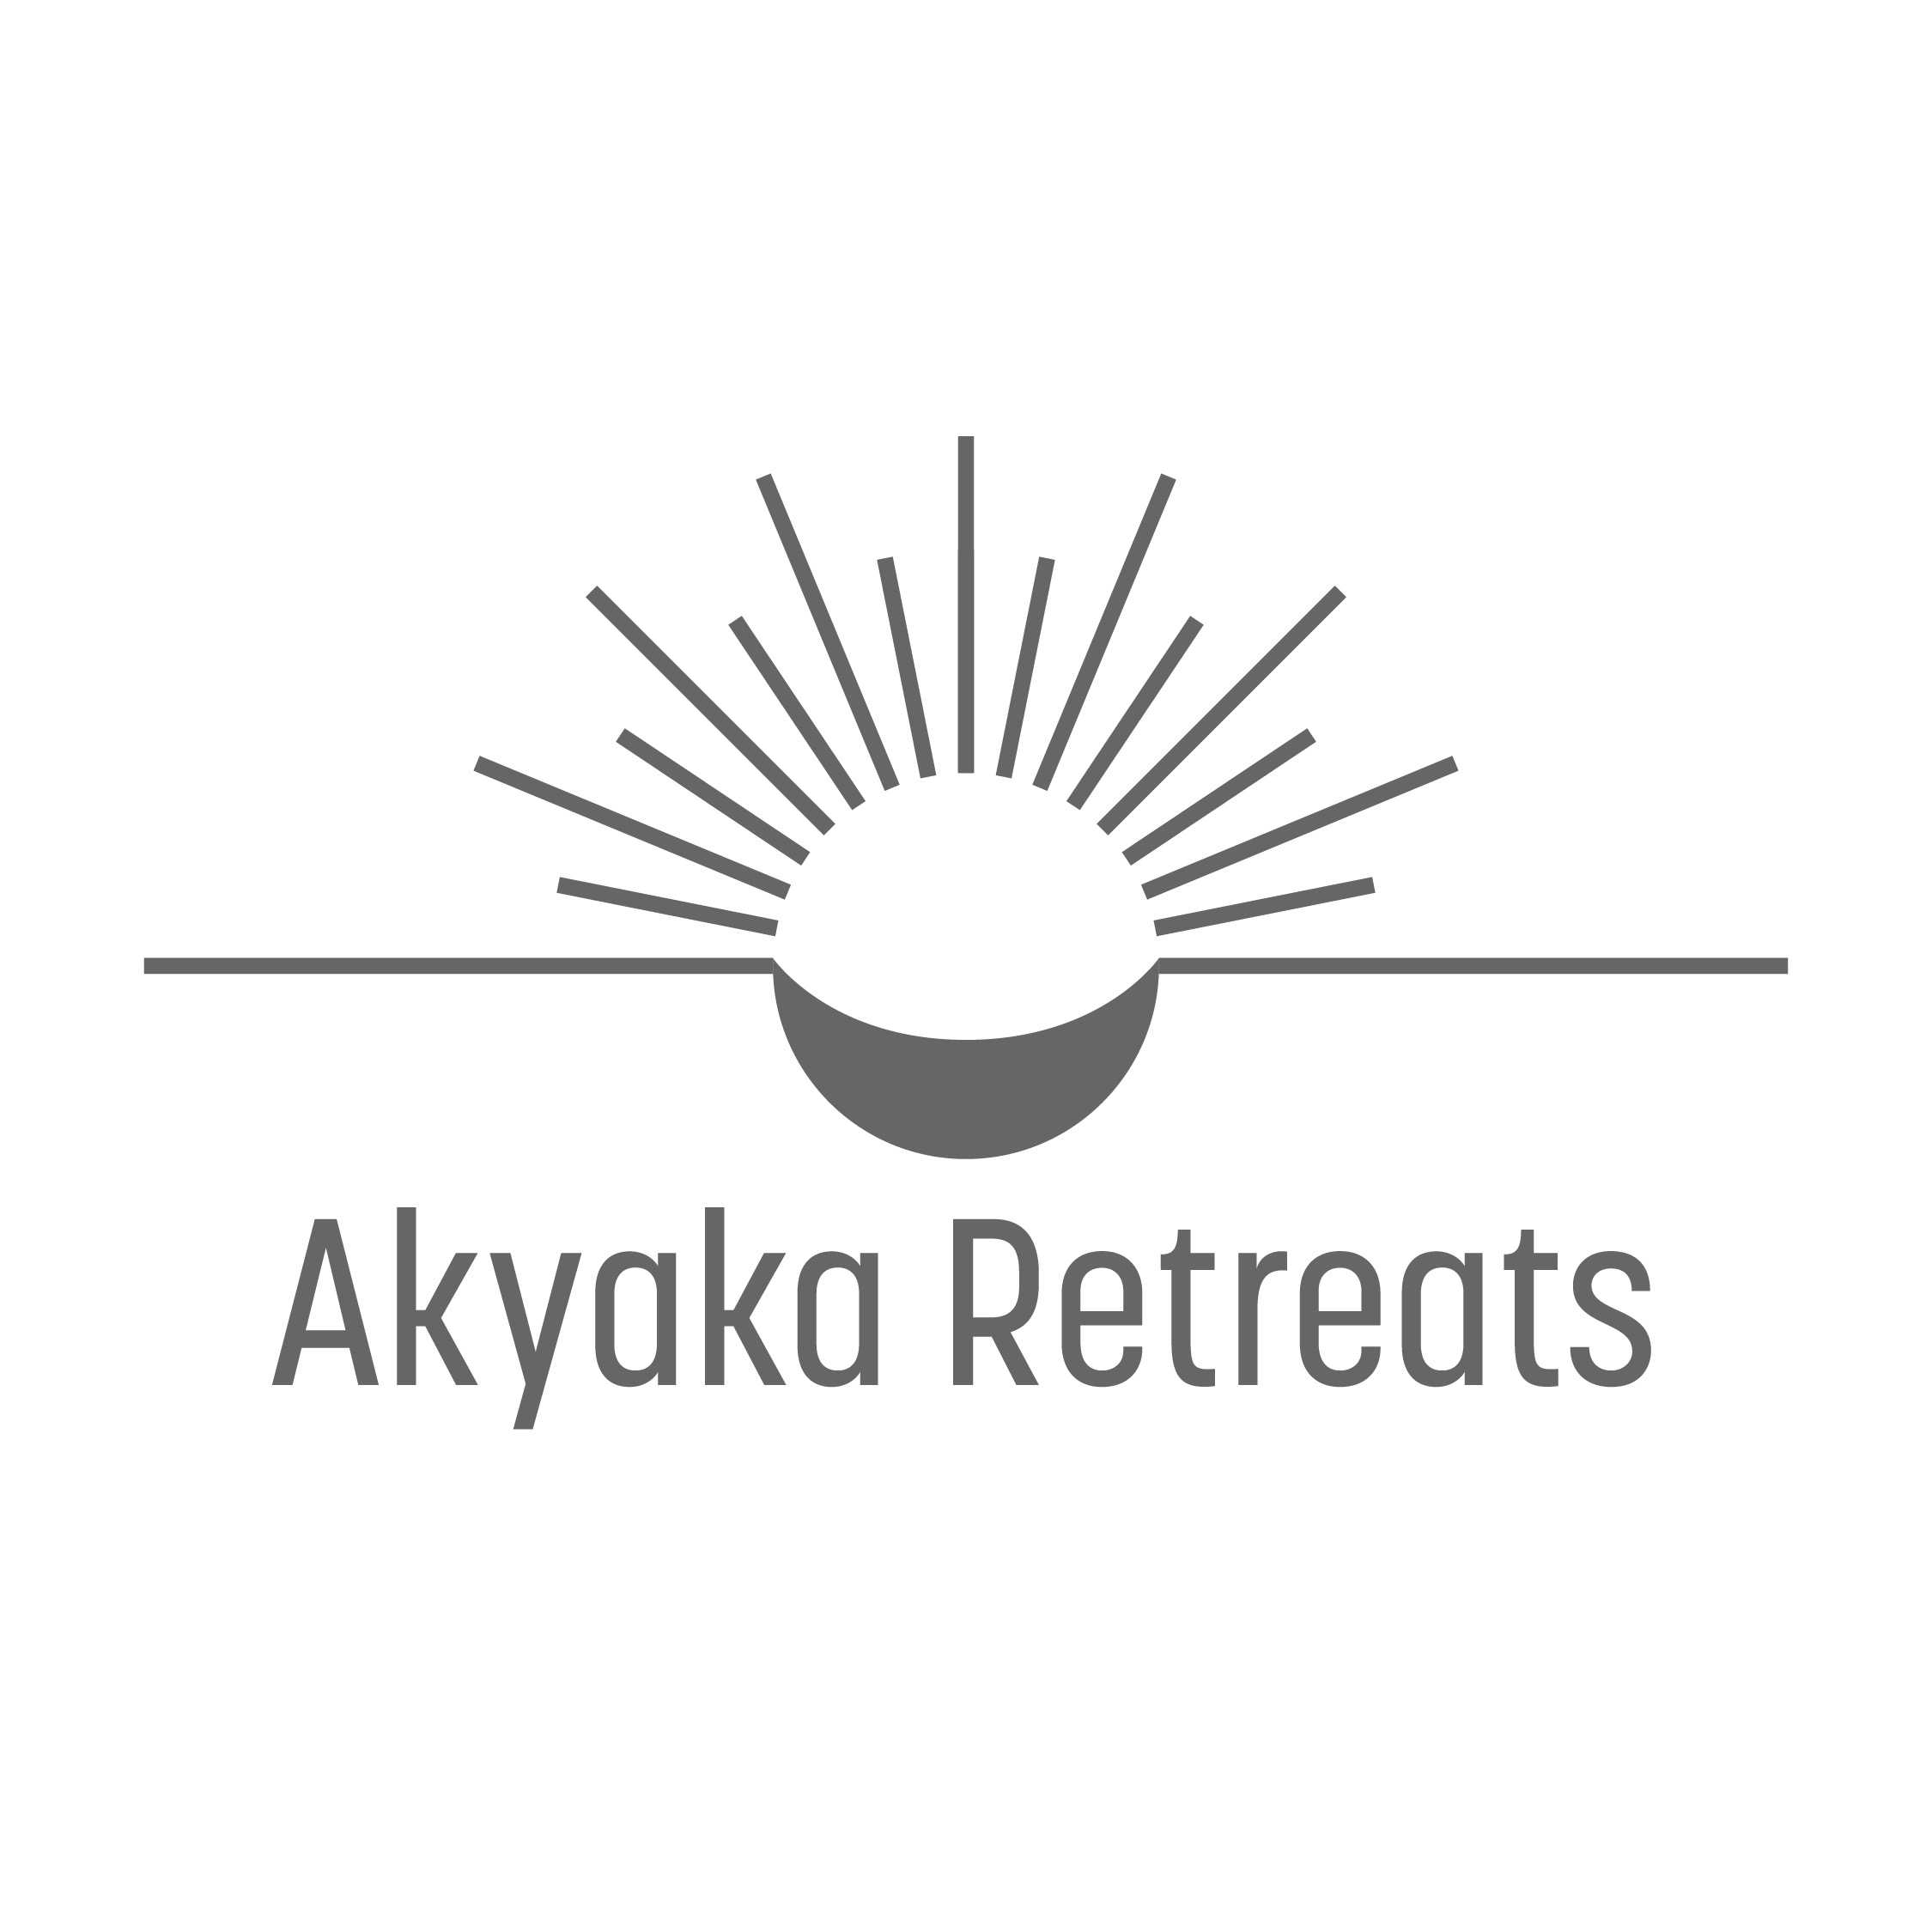 Akyaka Retreats